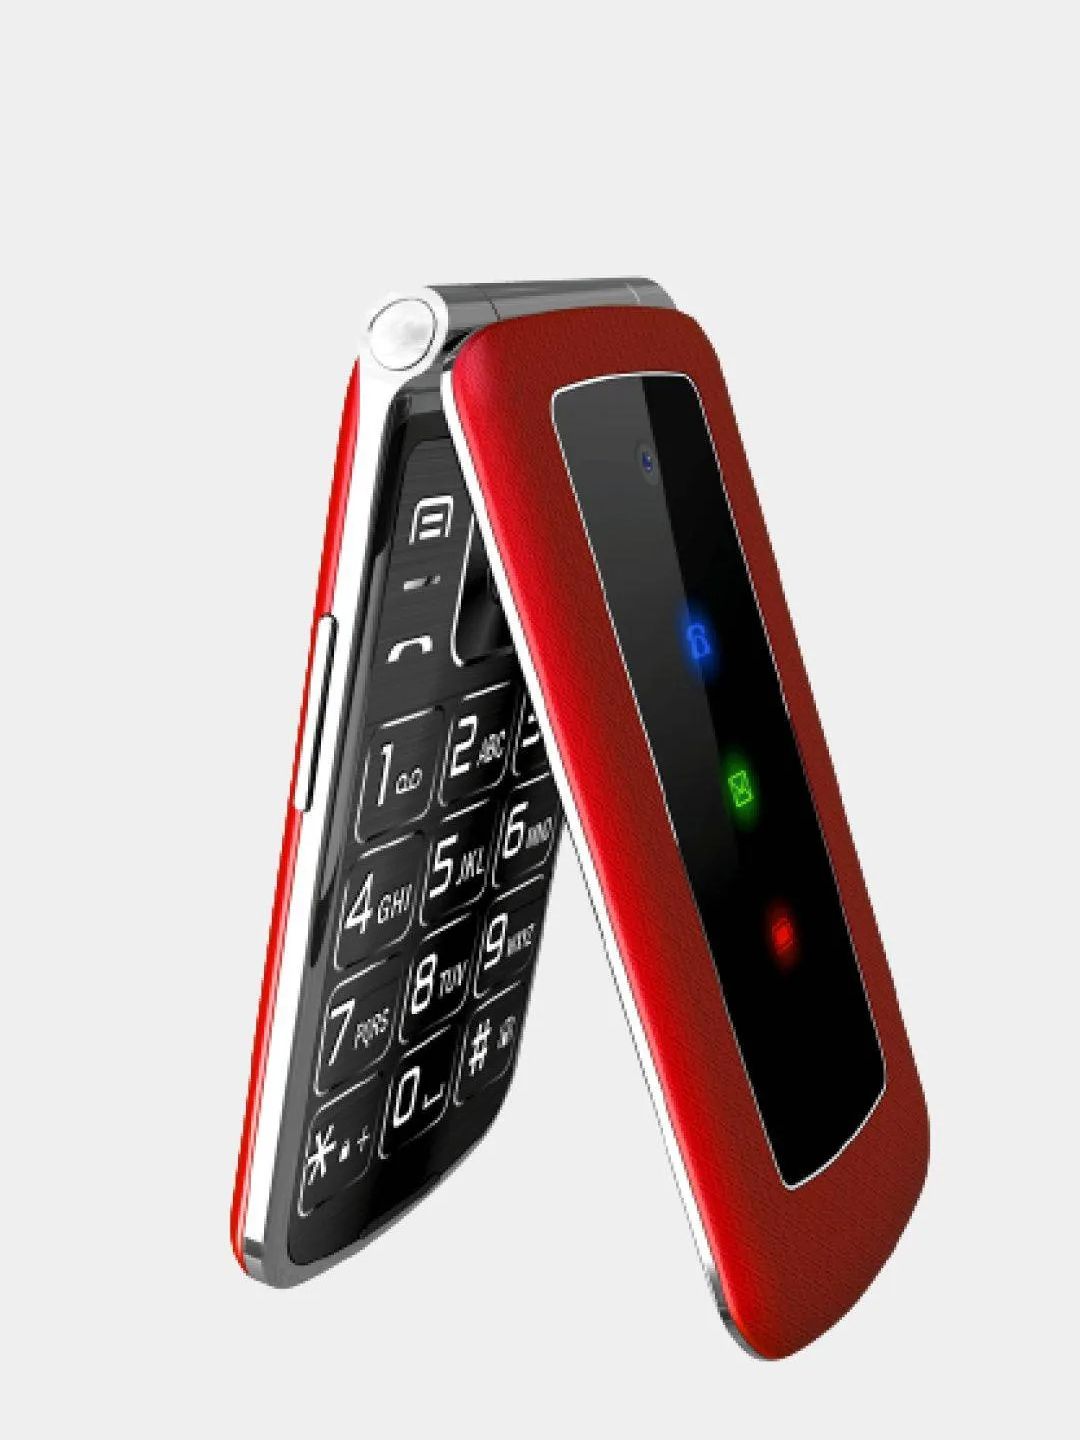 Телефон раскладушка красный